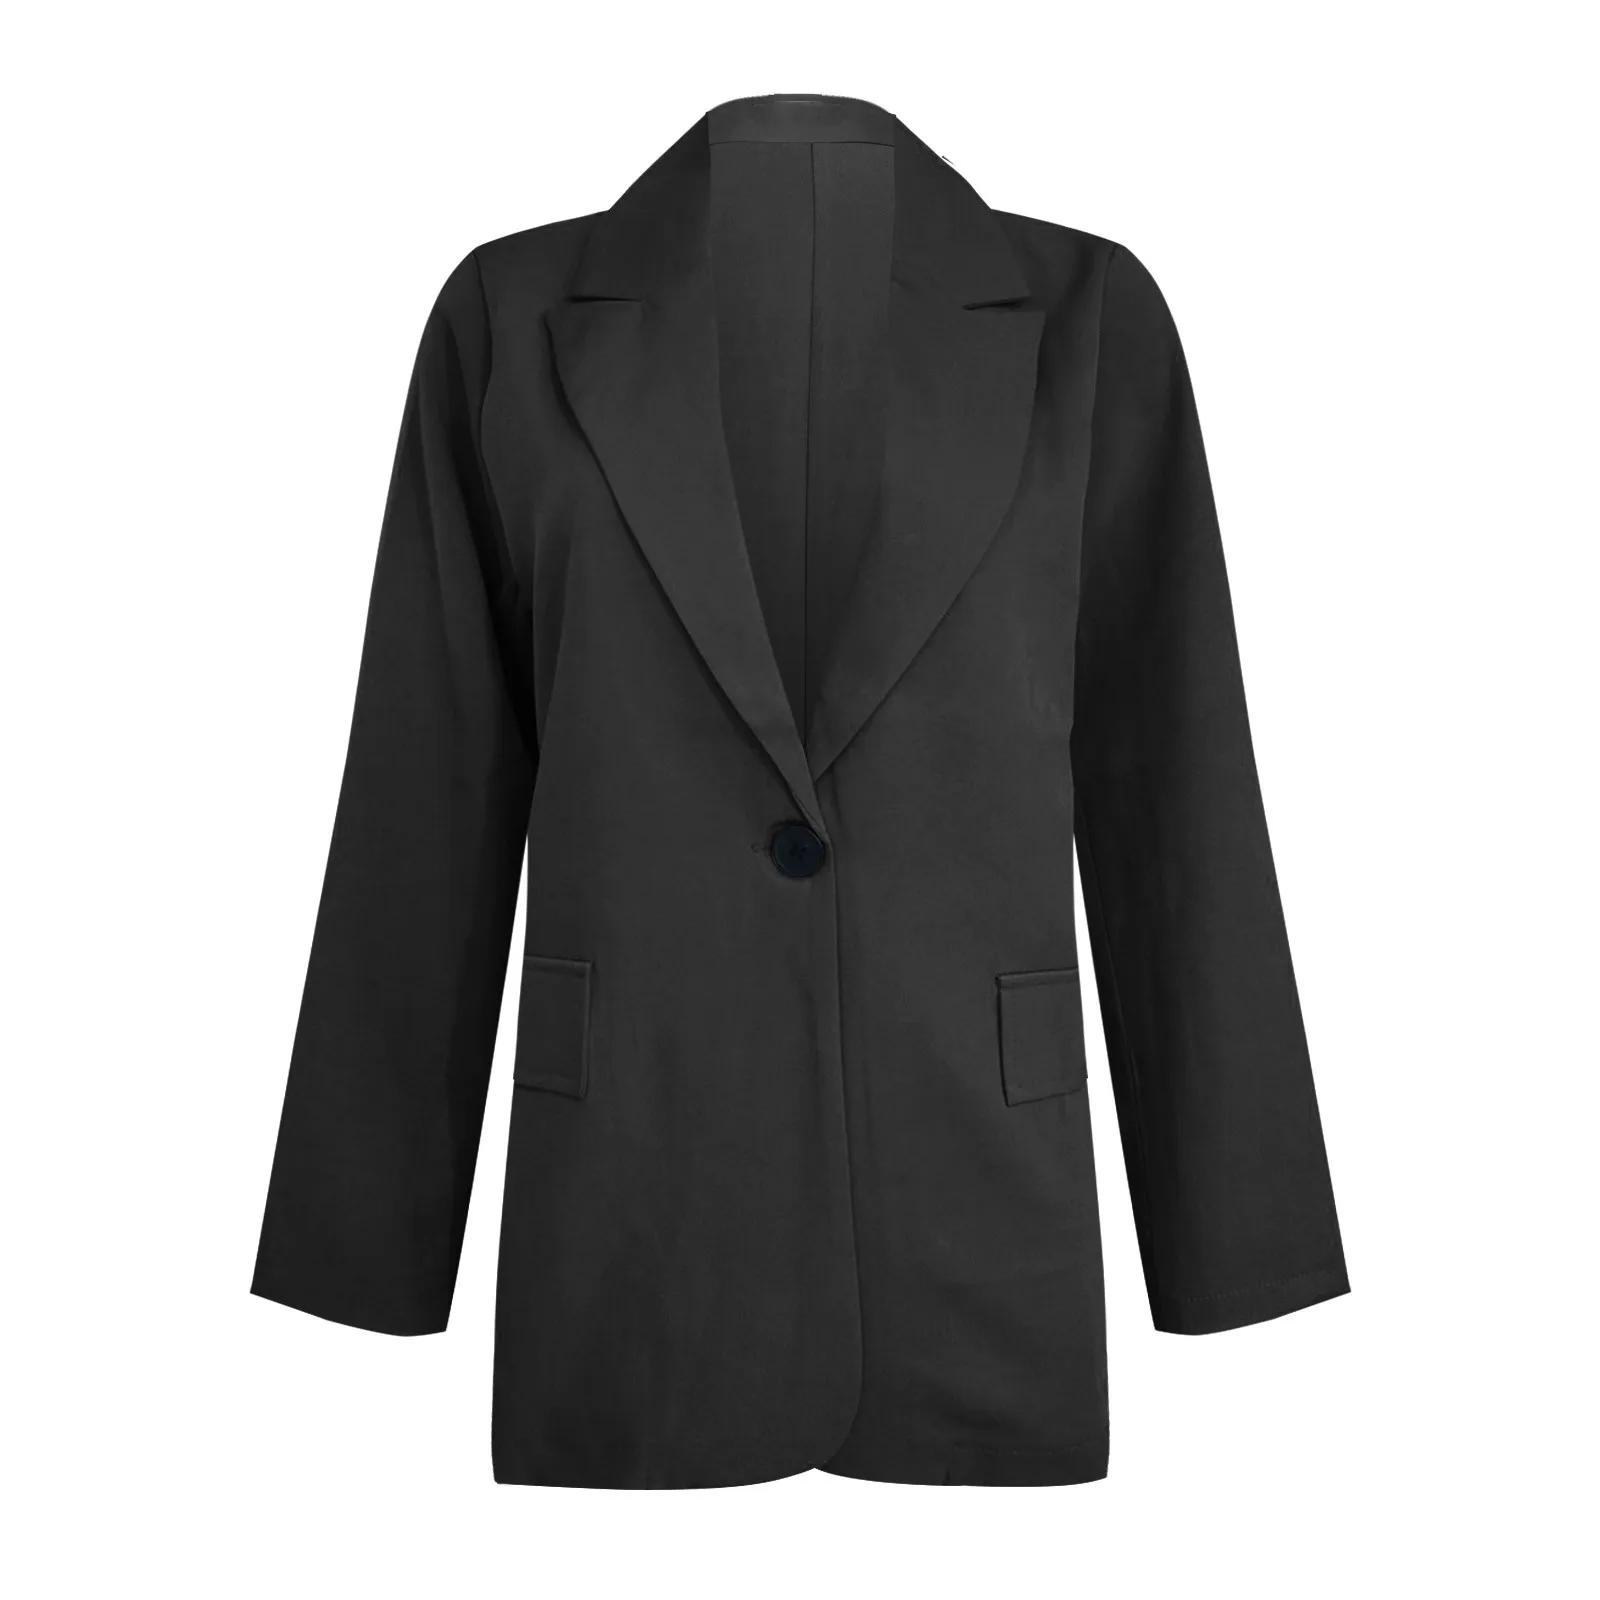 Women's Blazer Top Elegant Sporty Summer Fitted Jacket Suit Jacket Business Oversize Tracksuit Office Lady Blouse Coat Tops 4